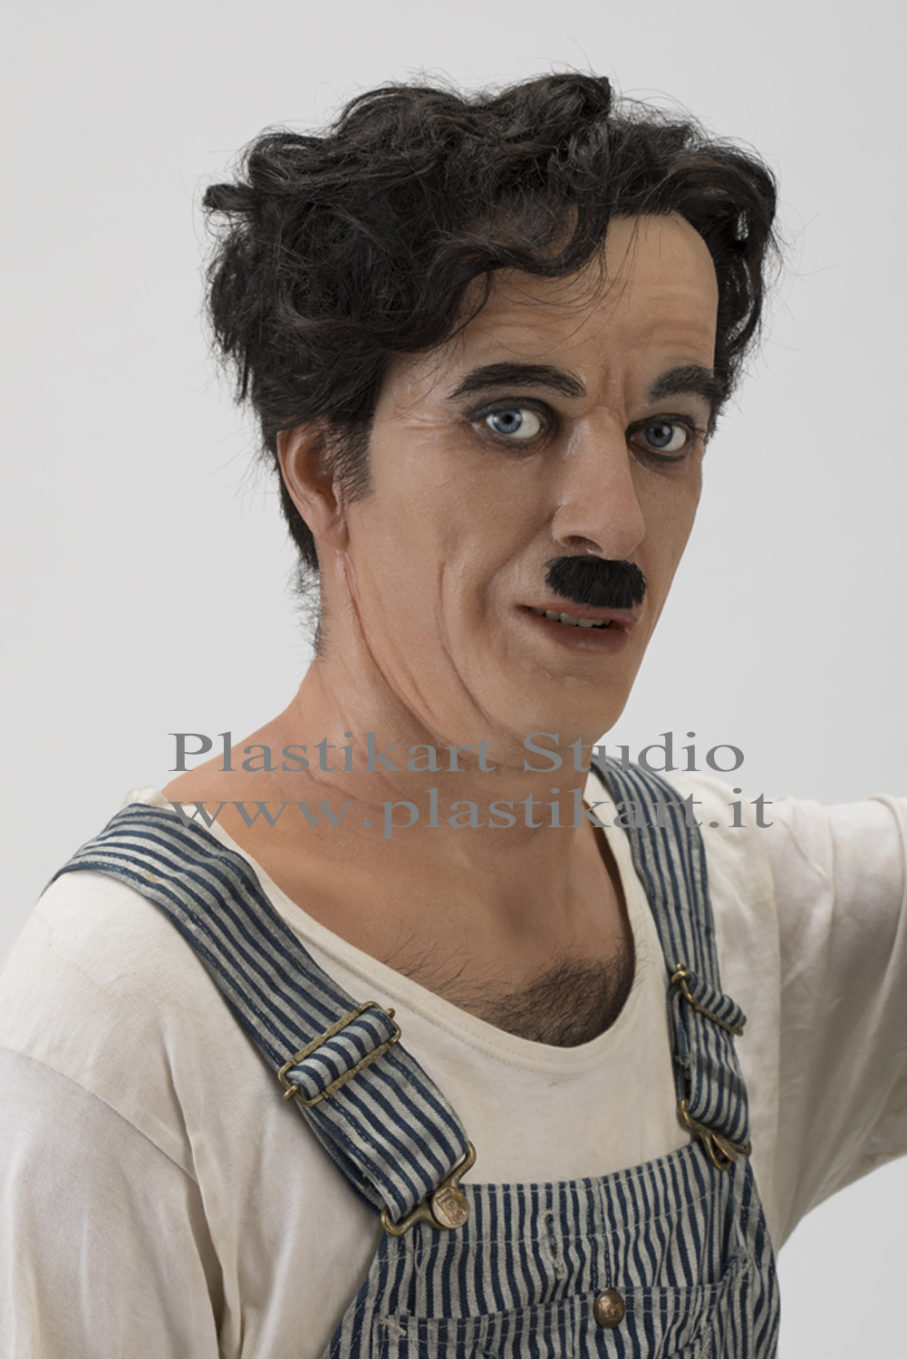 Charlie Chaplin Muse Trento.
Plastikart Studio